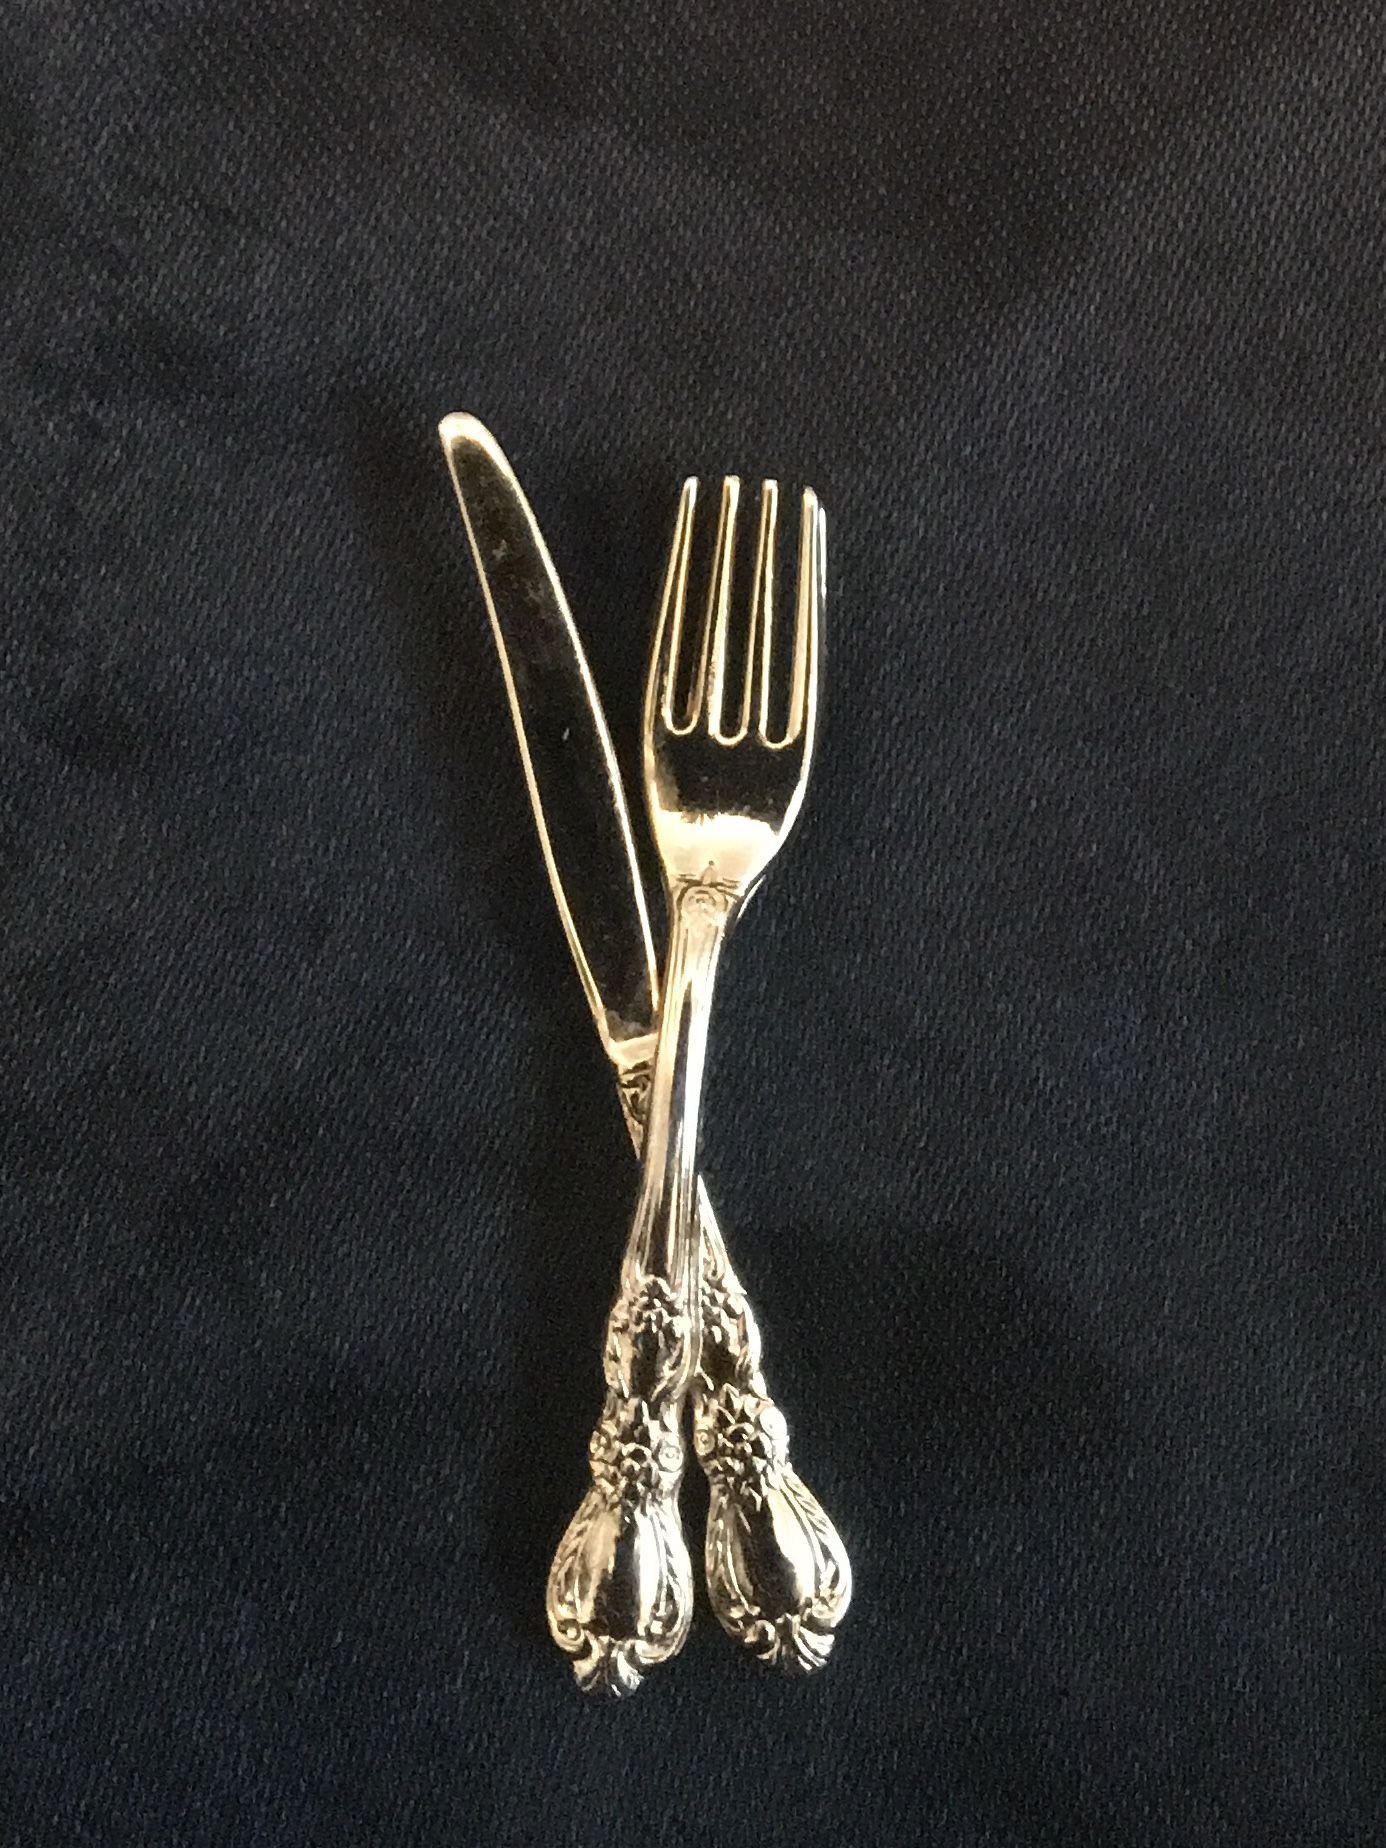 Vintage Estate Gold Tone Fork & Knife Silverware Tie Tack